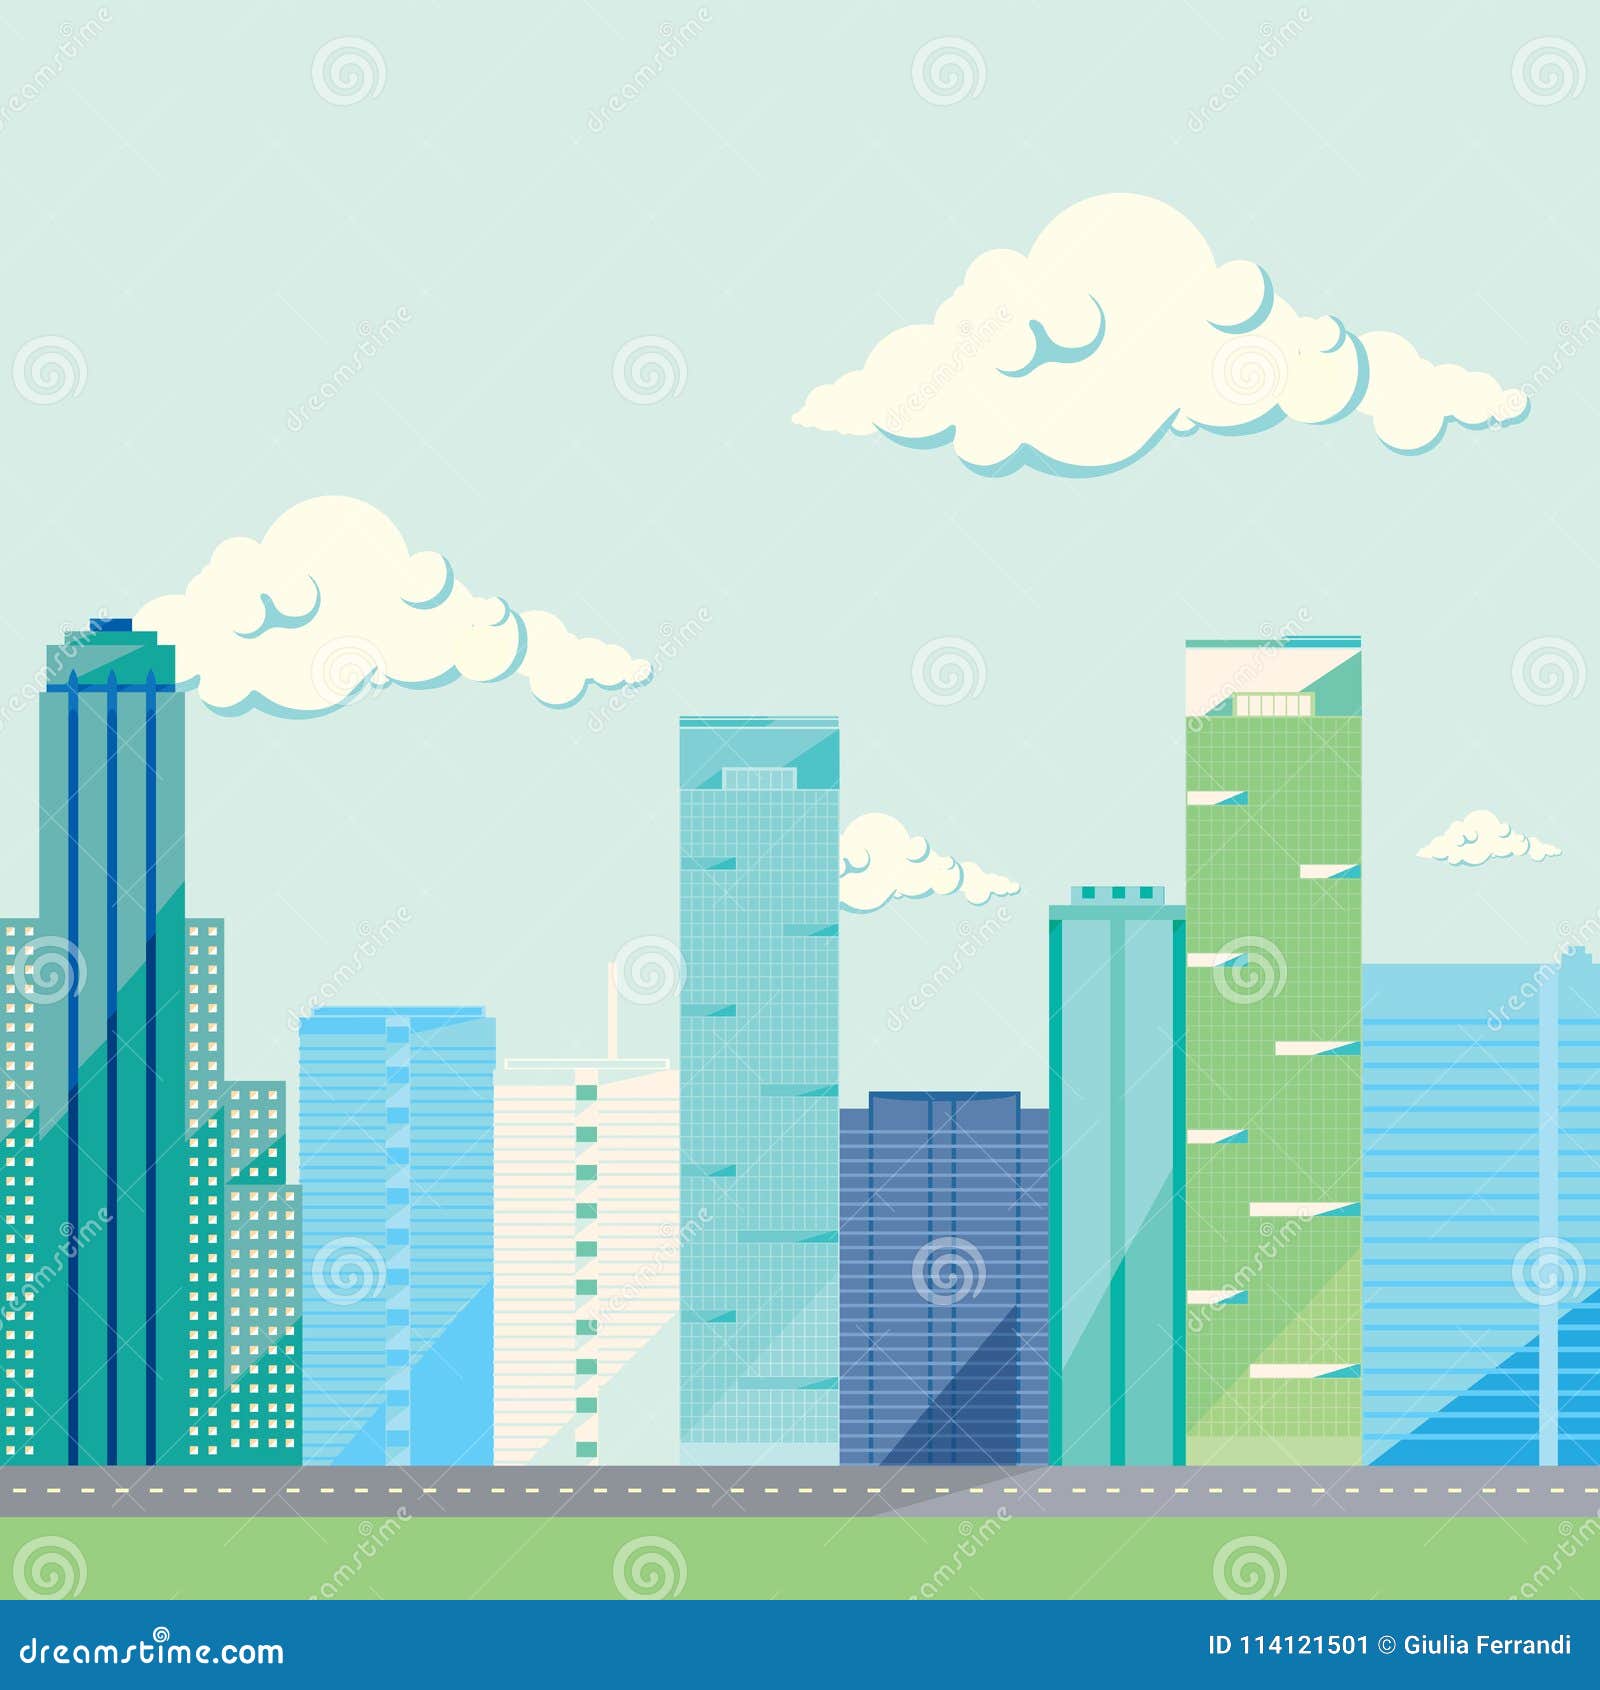 metropolis: skyscreapers over blue sky